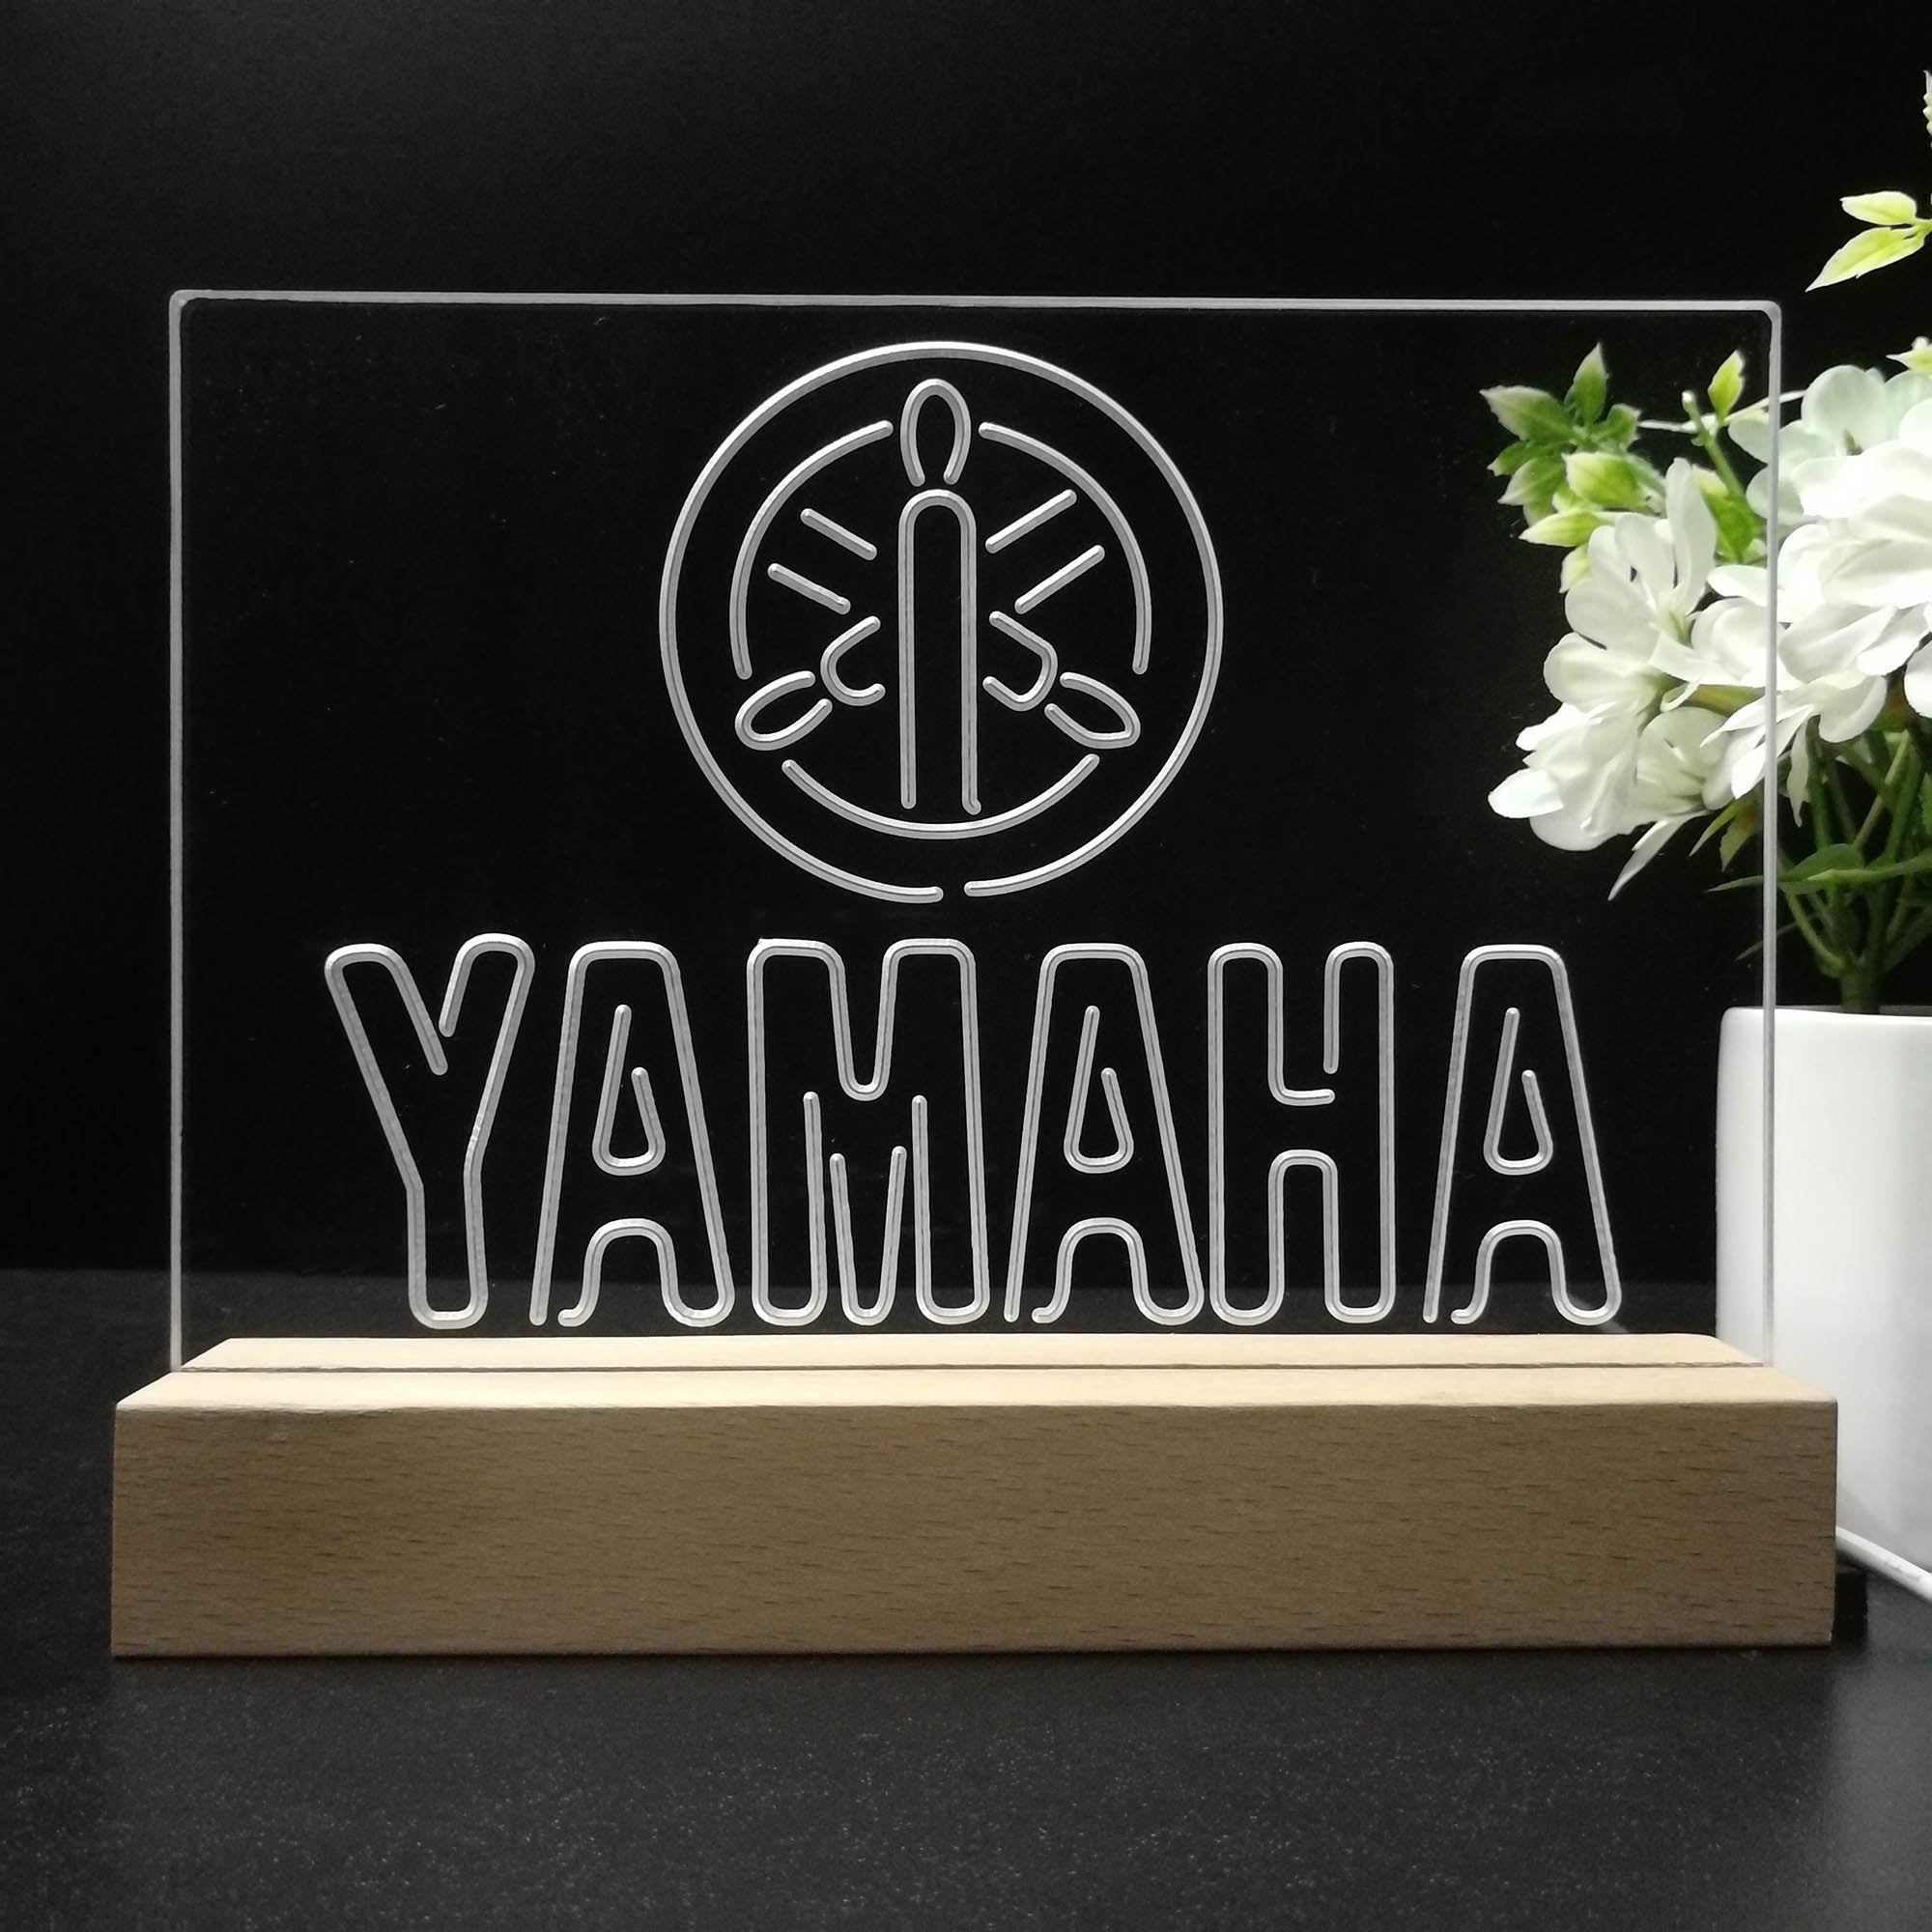 Yamaha 3D Illusion Night Light Desk Lamp